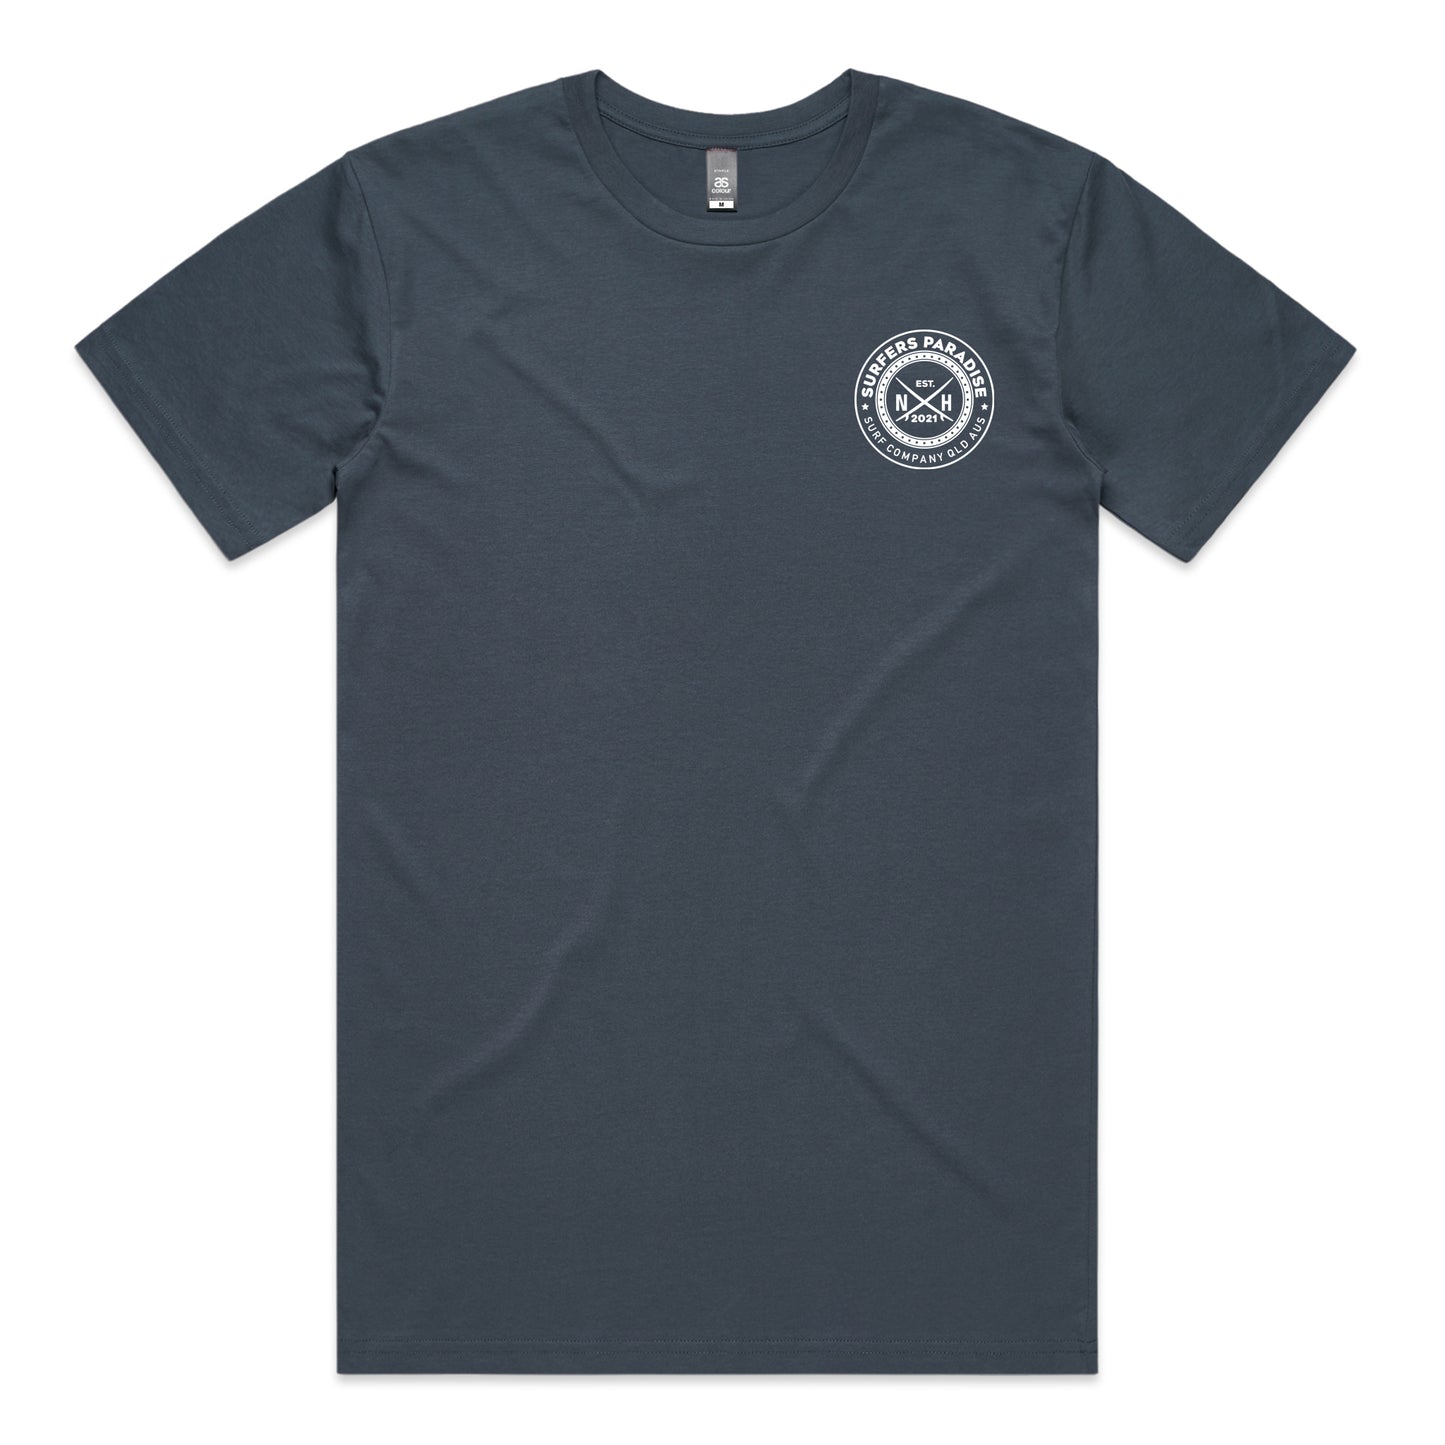 Surfers Paradise Badge T-shirt - Petrol Blue